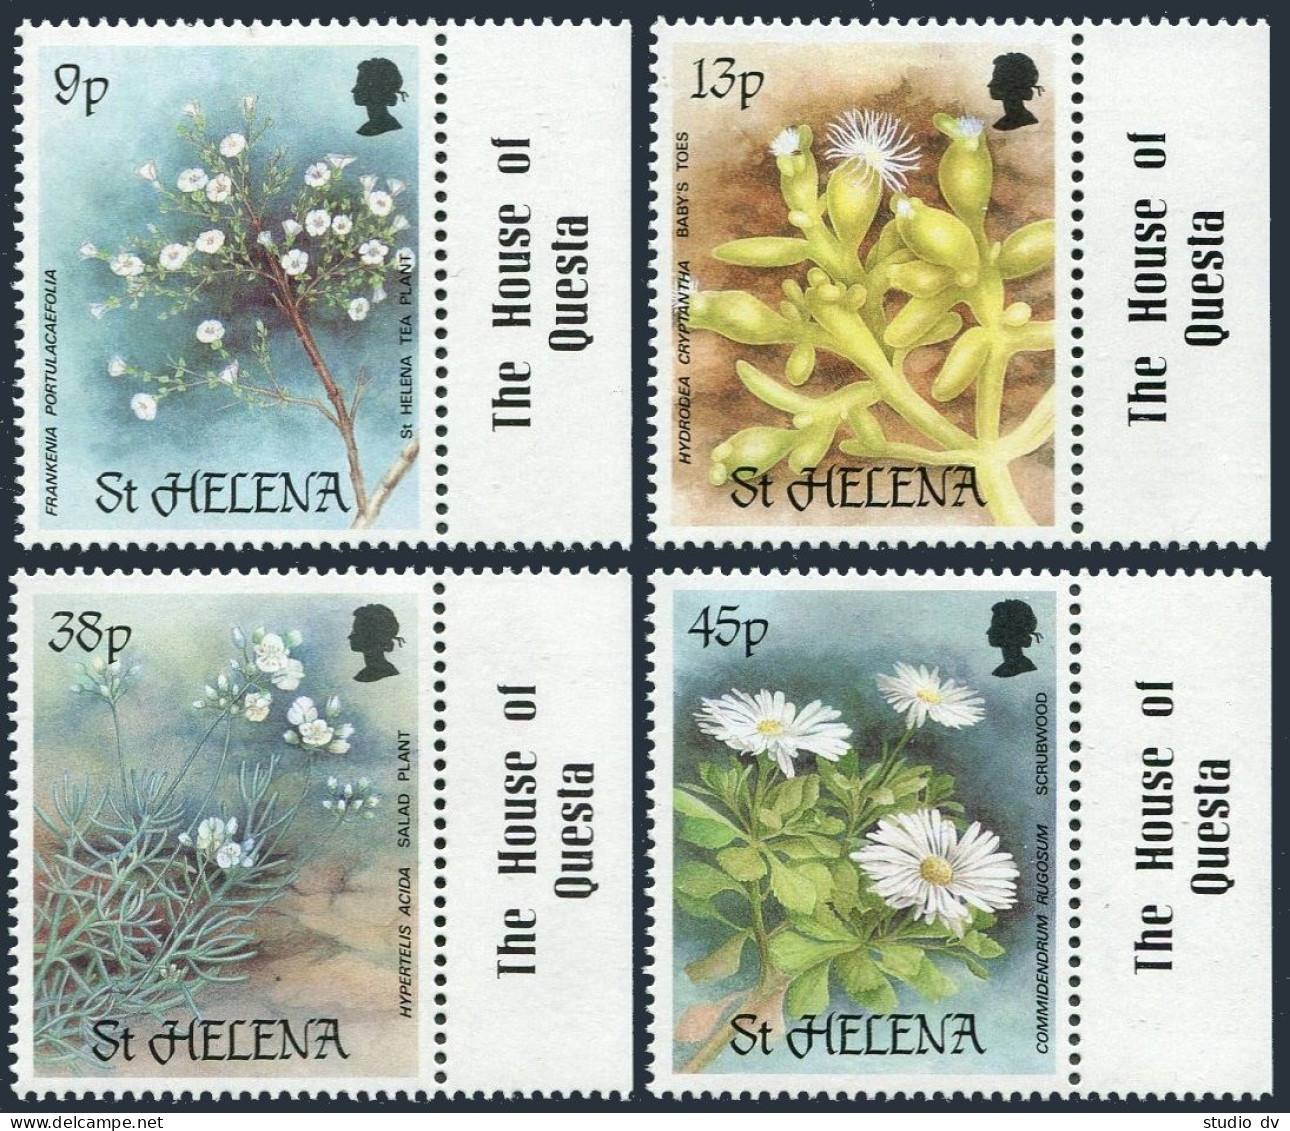 St Helena 479-482, MNH. Mi 469-472. 1987. Ea Plant, Baby's Toes,Salad, Scrubwood - Sainte-Hélène